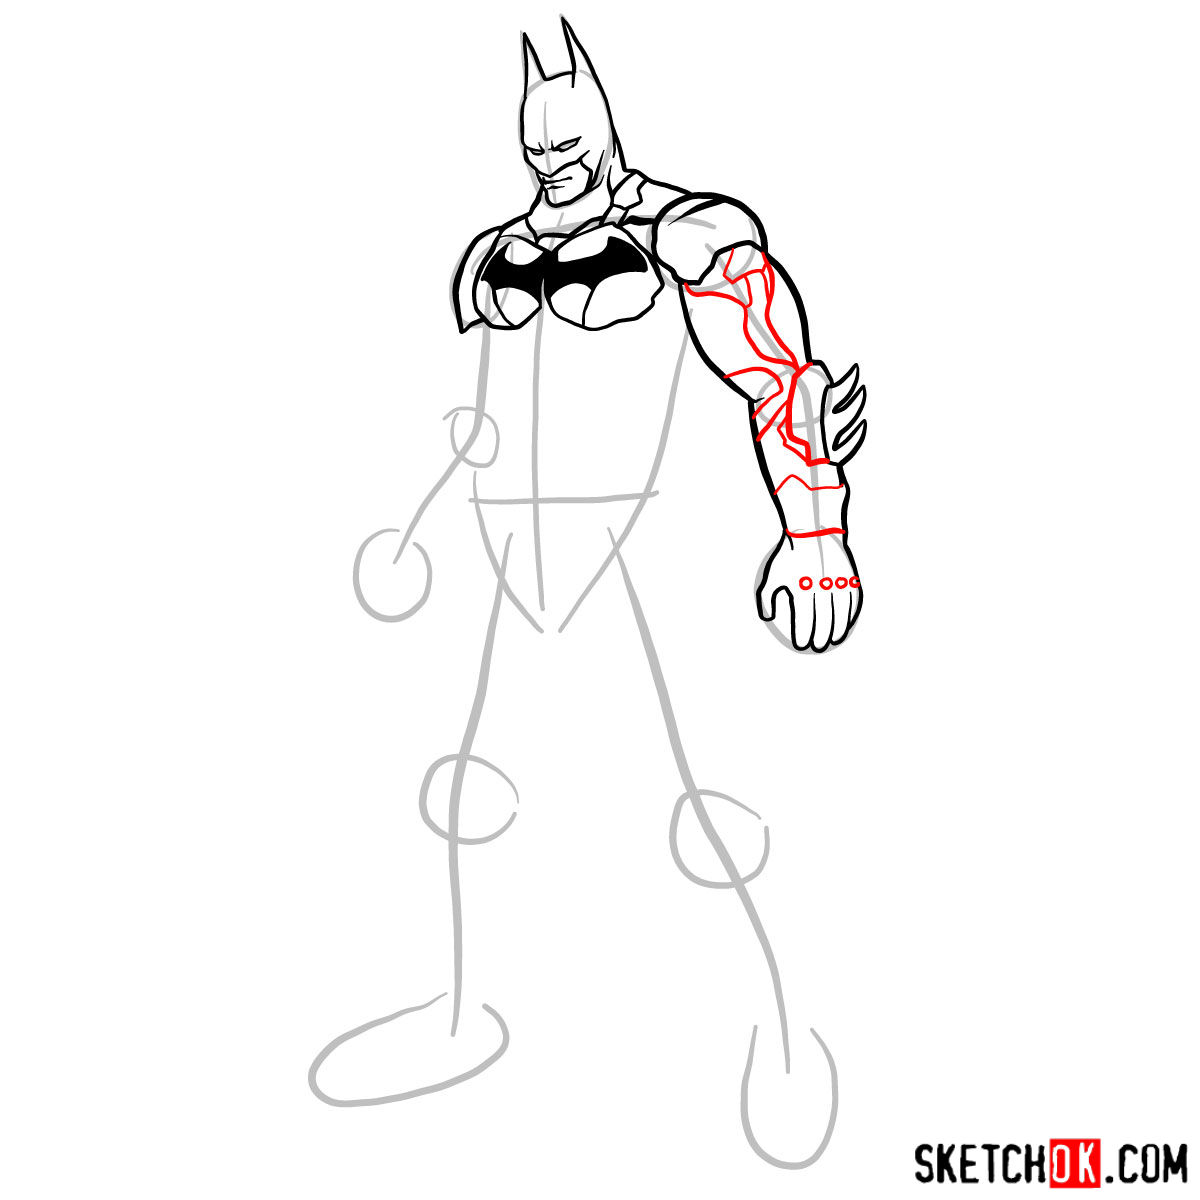 How to draw Batman the Dark Knight - step 08